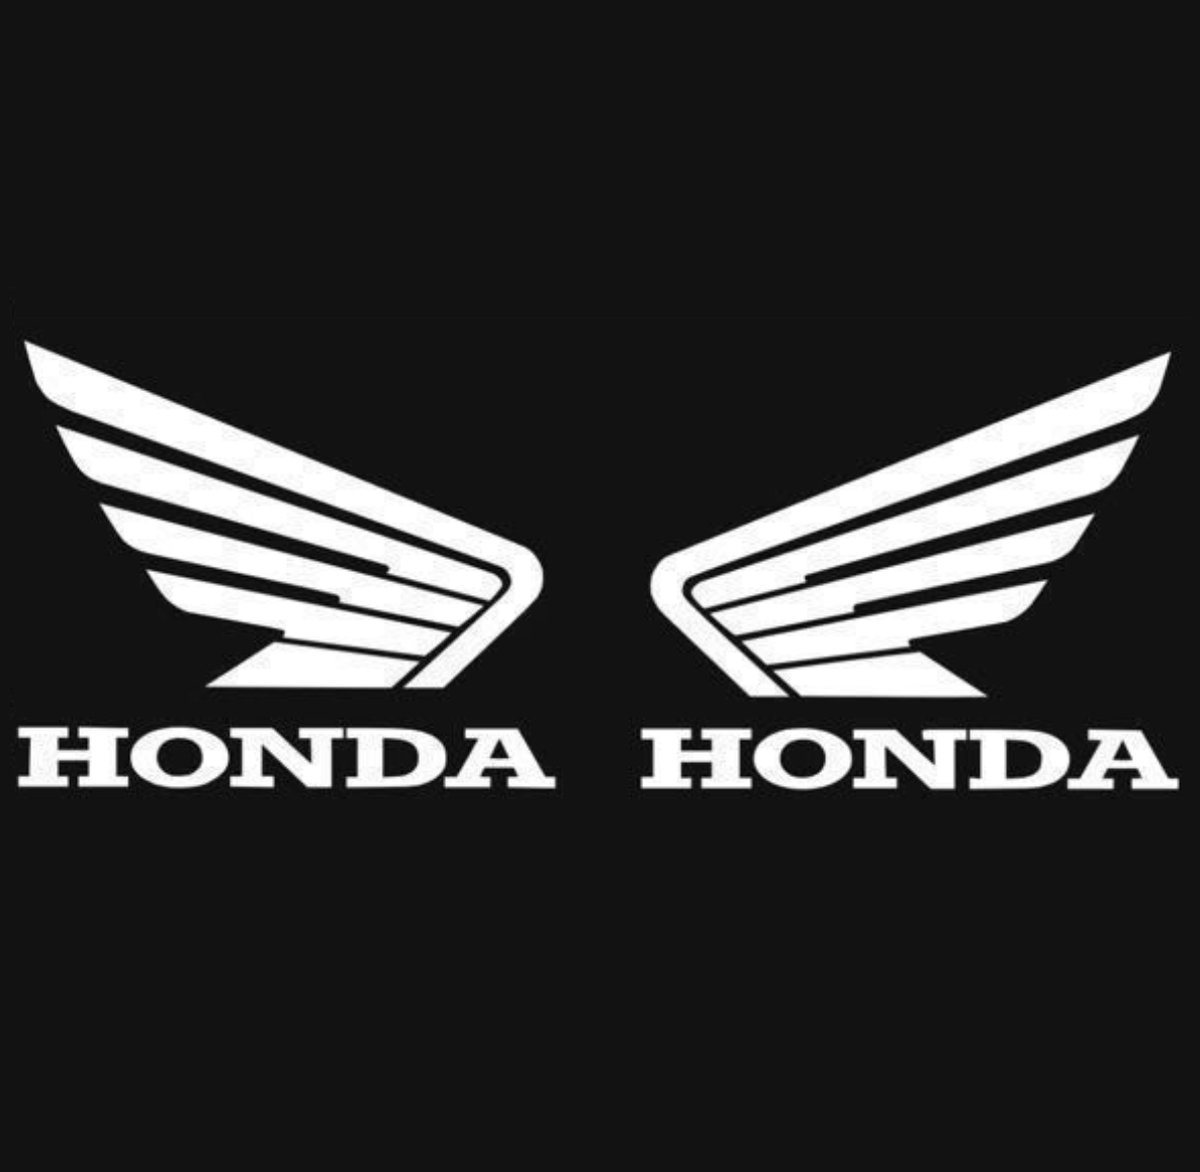 Honda Stickers - Decals - Wit - Honda Wings - Motor / Auto